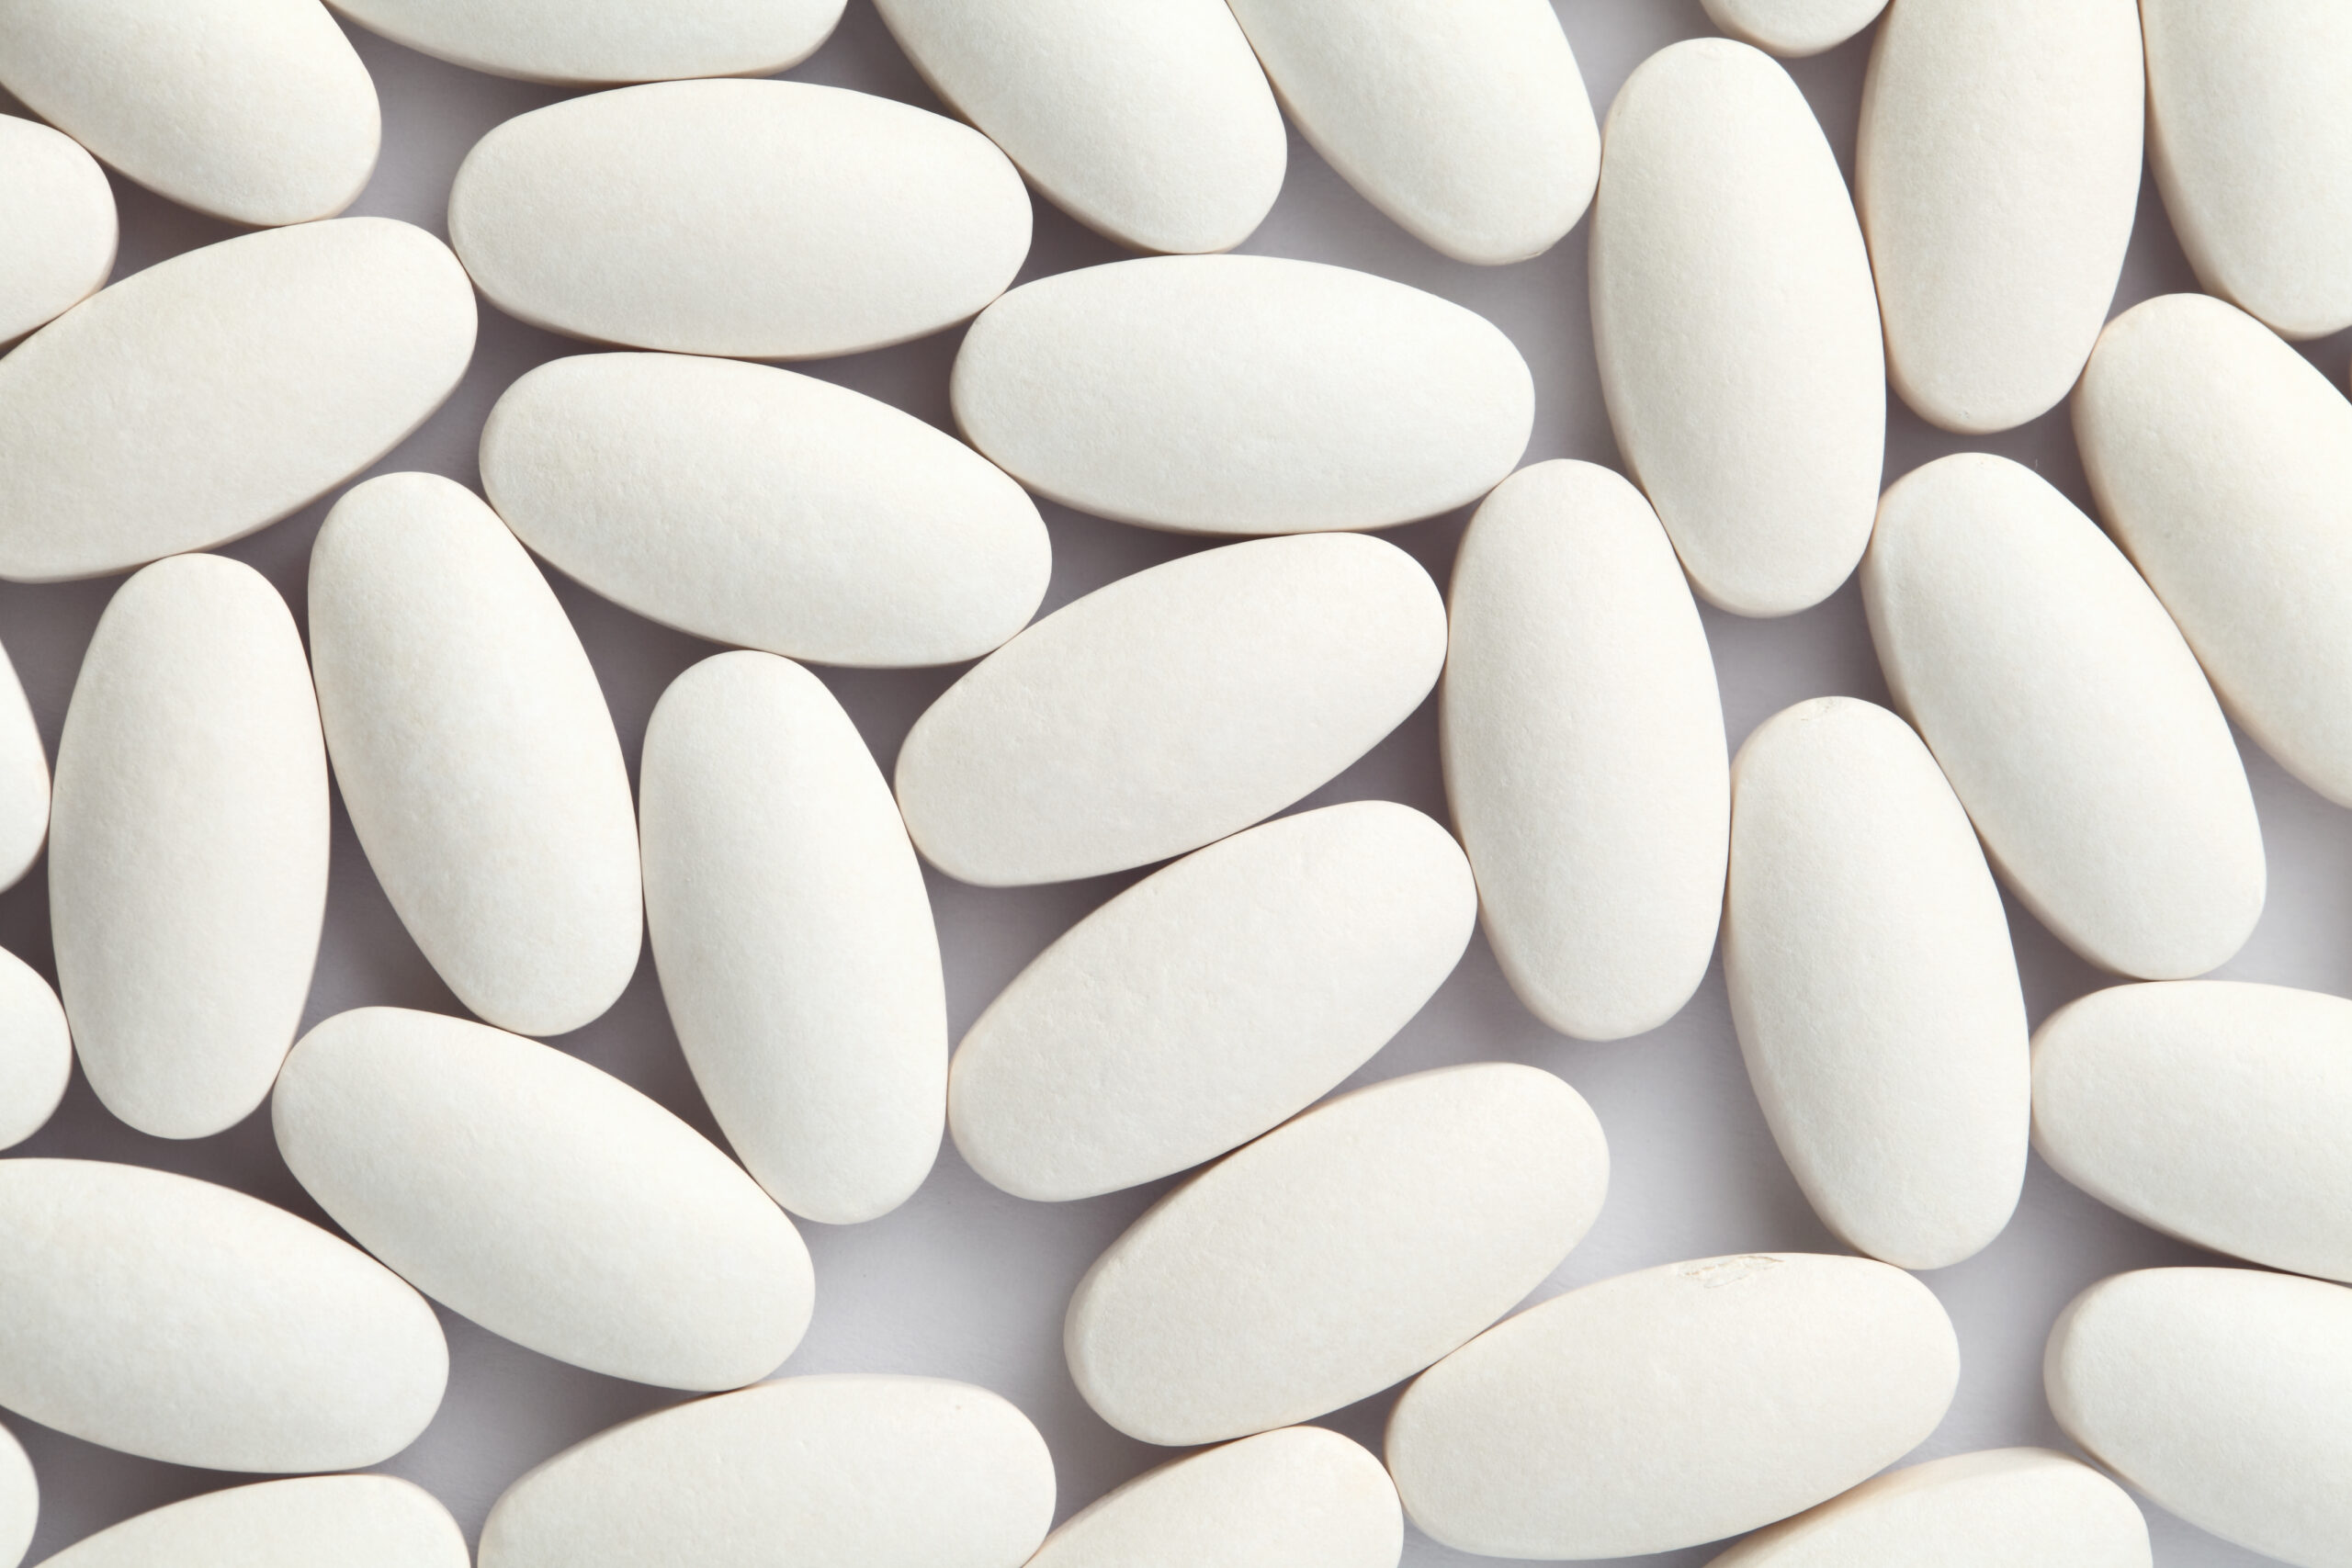 m365 pills white spread across a white background